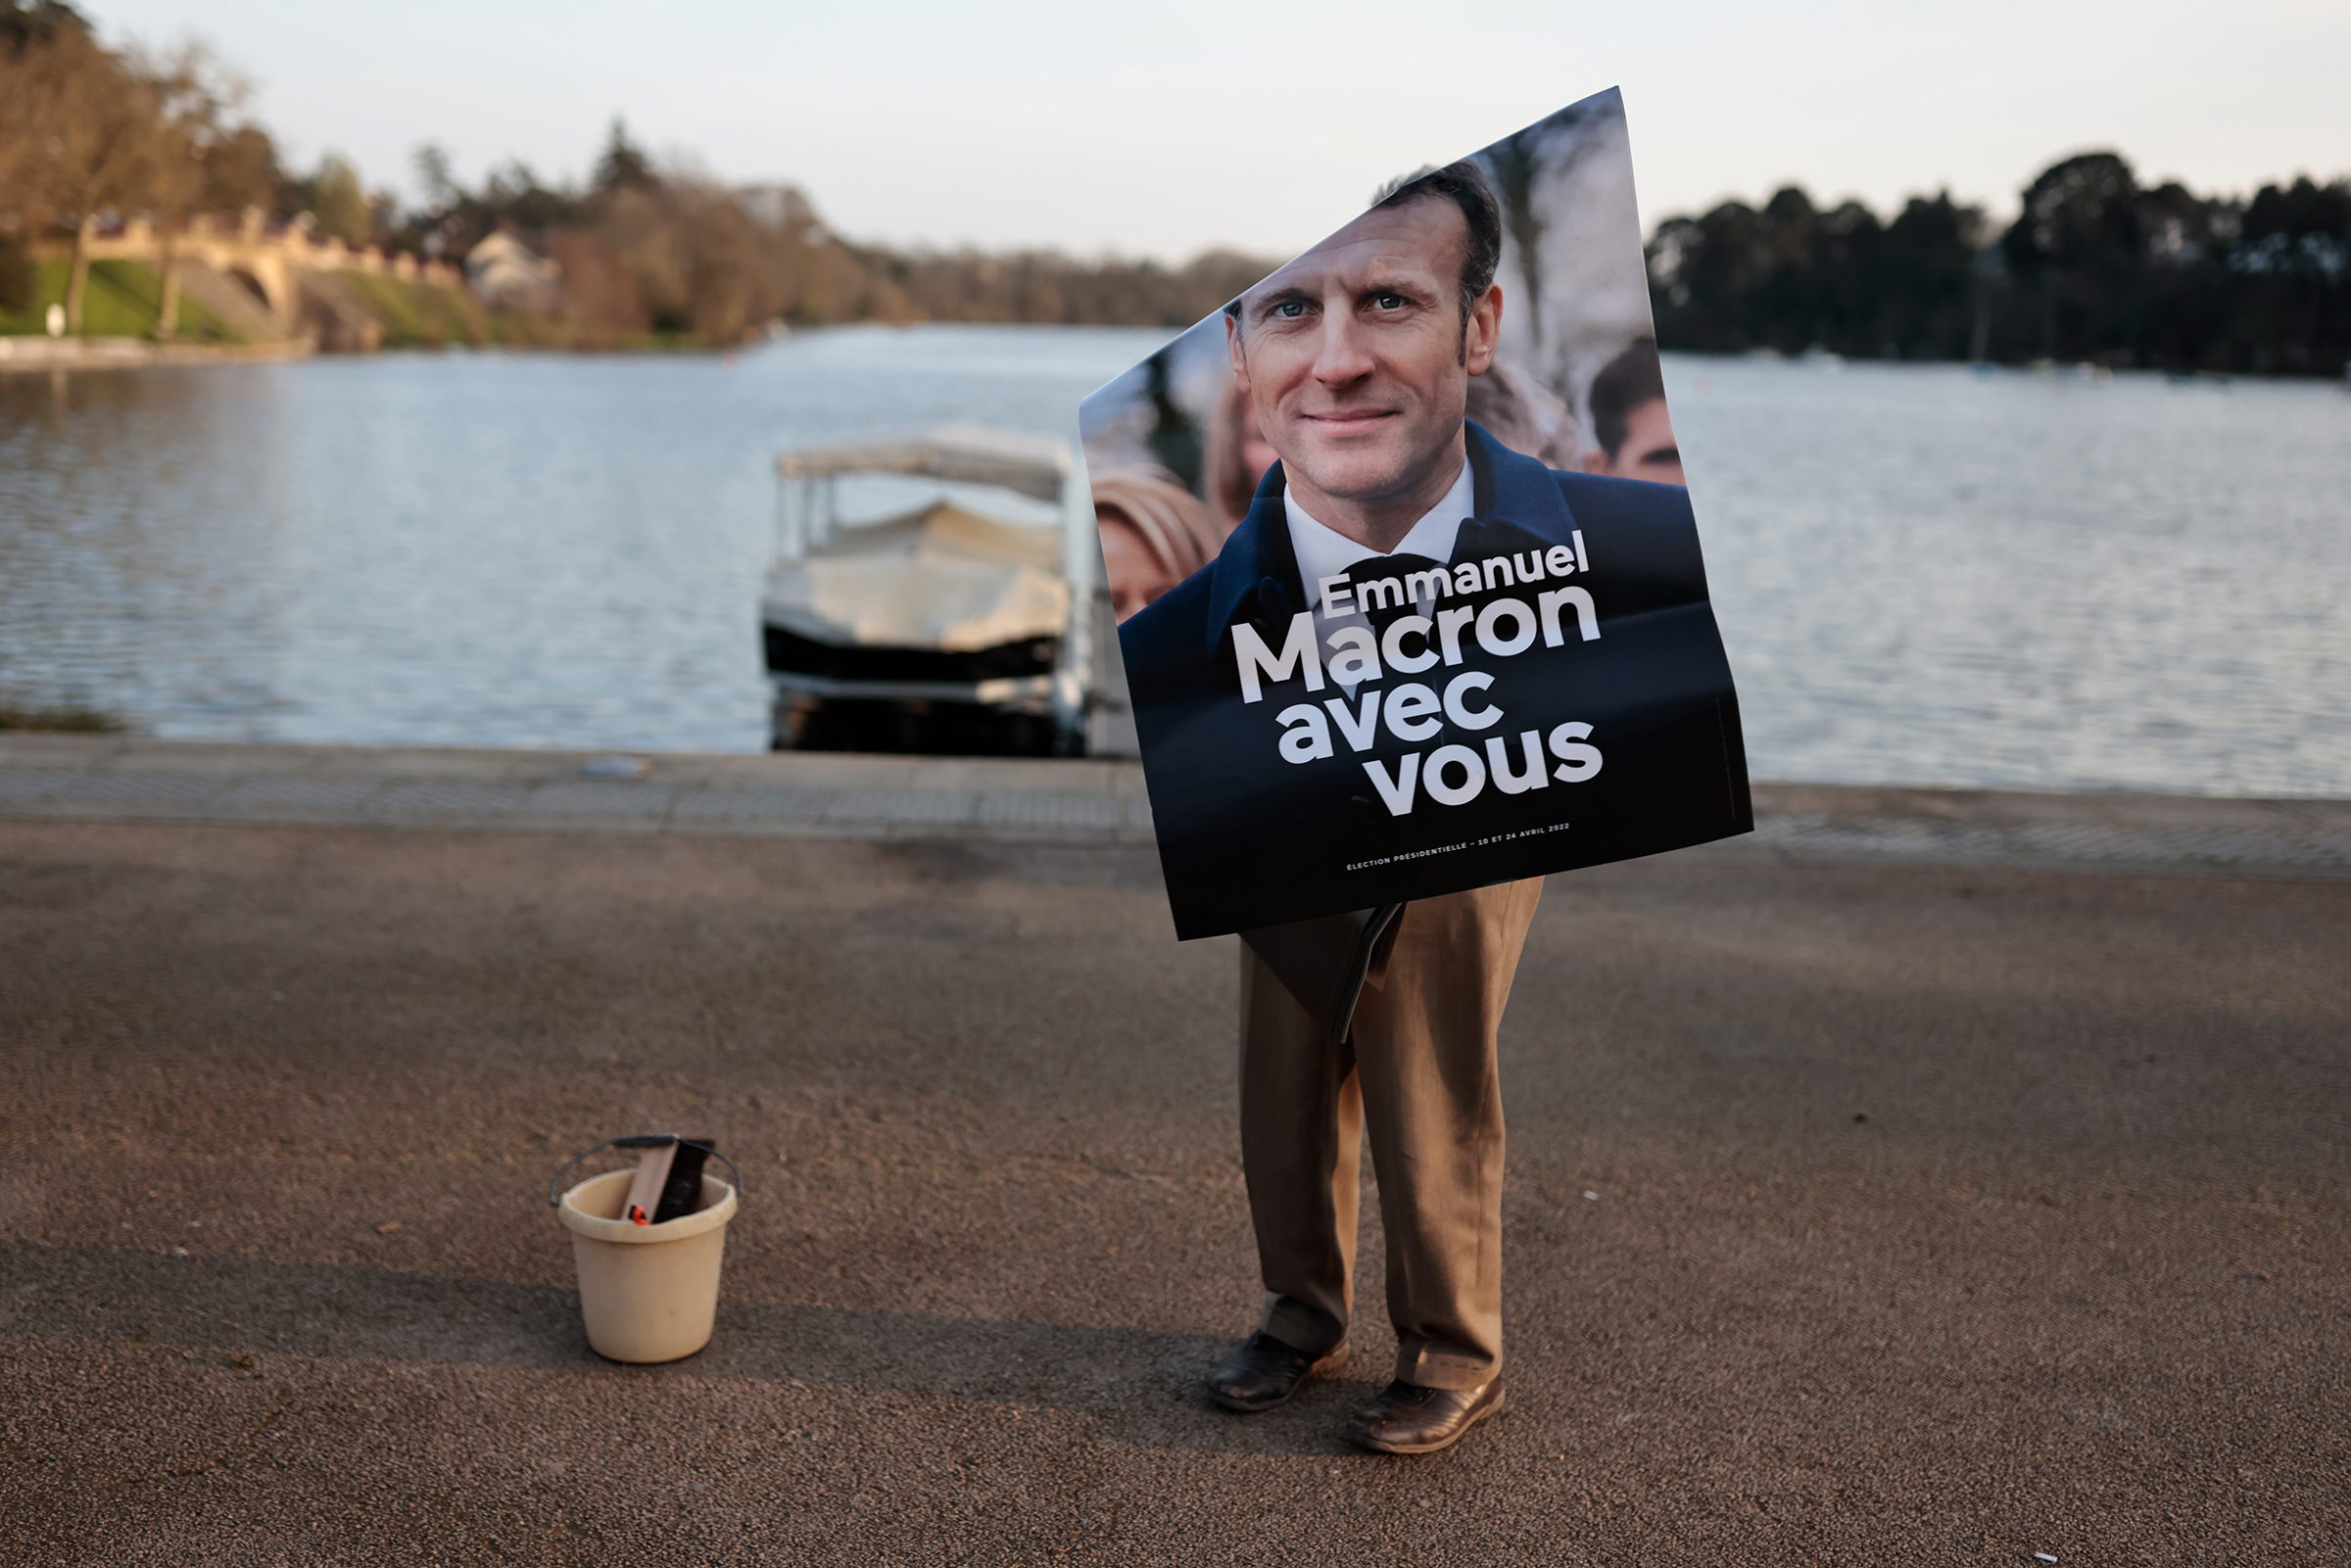 A campaign poster showing President Macron on March 22 (Jeremias Gonzalez—AP)